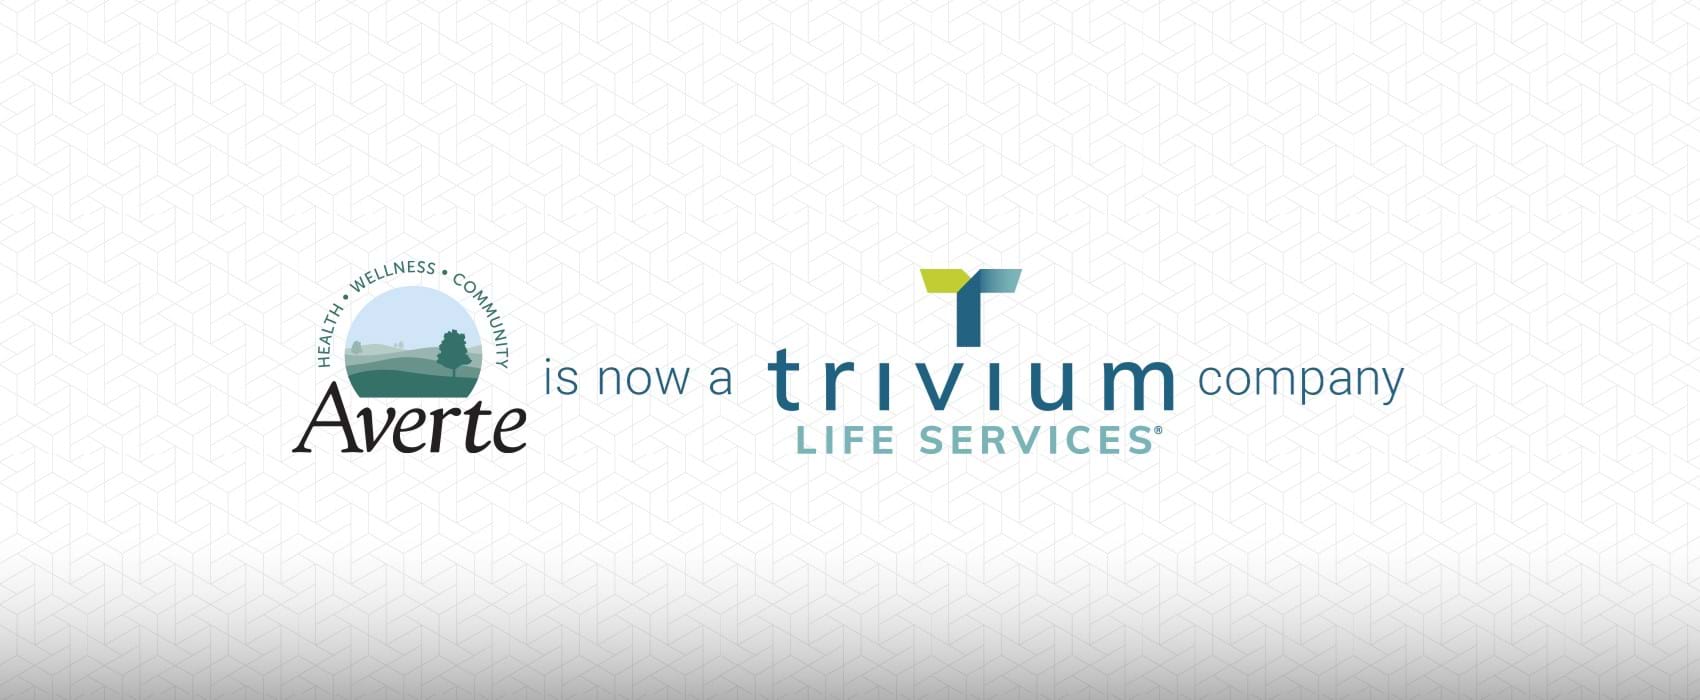 Averte joins Trivium Life Service